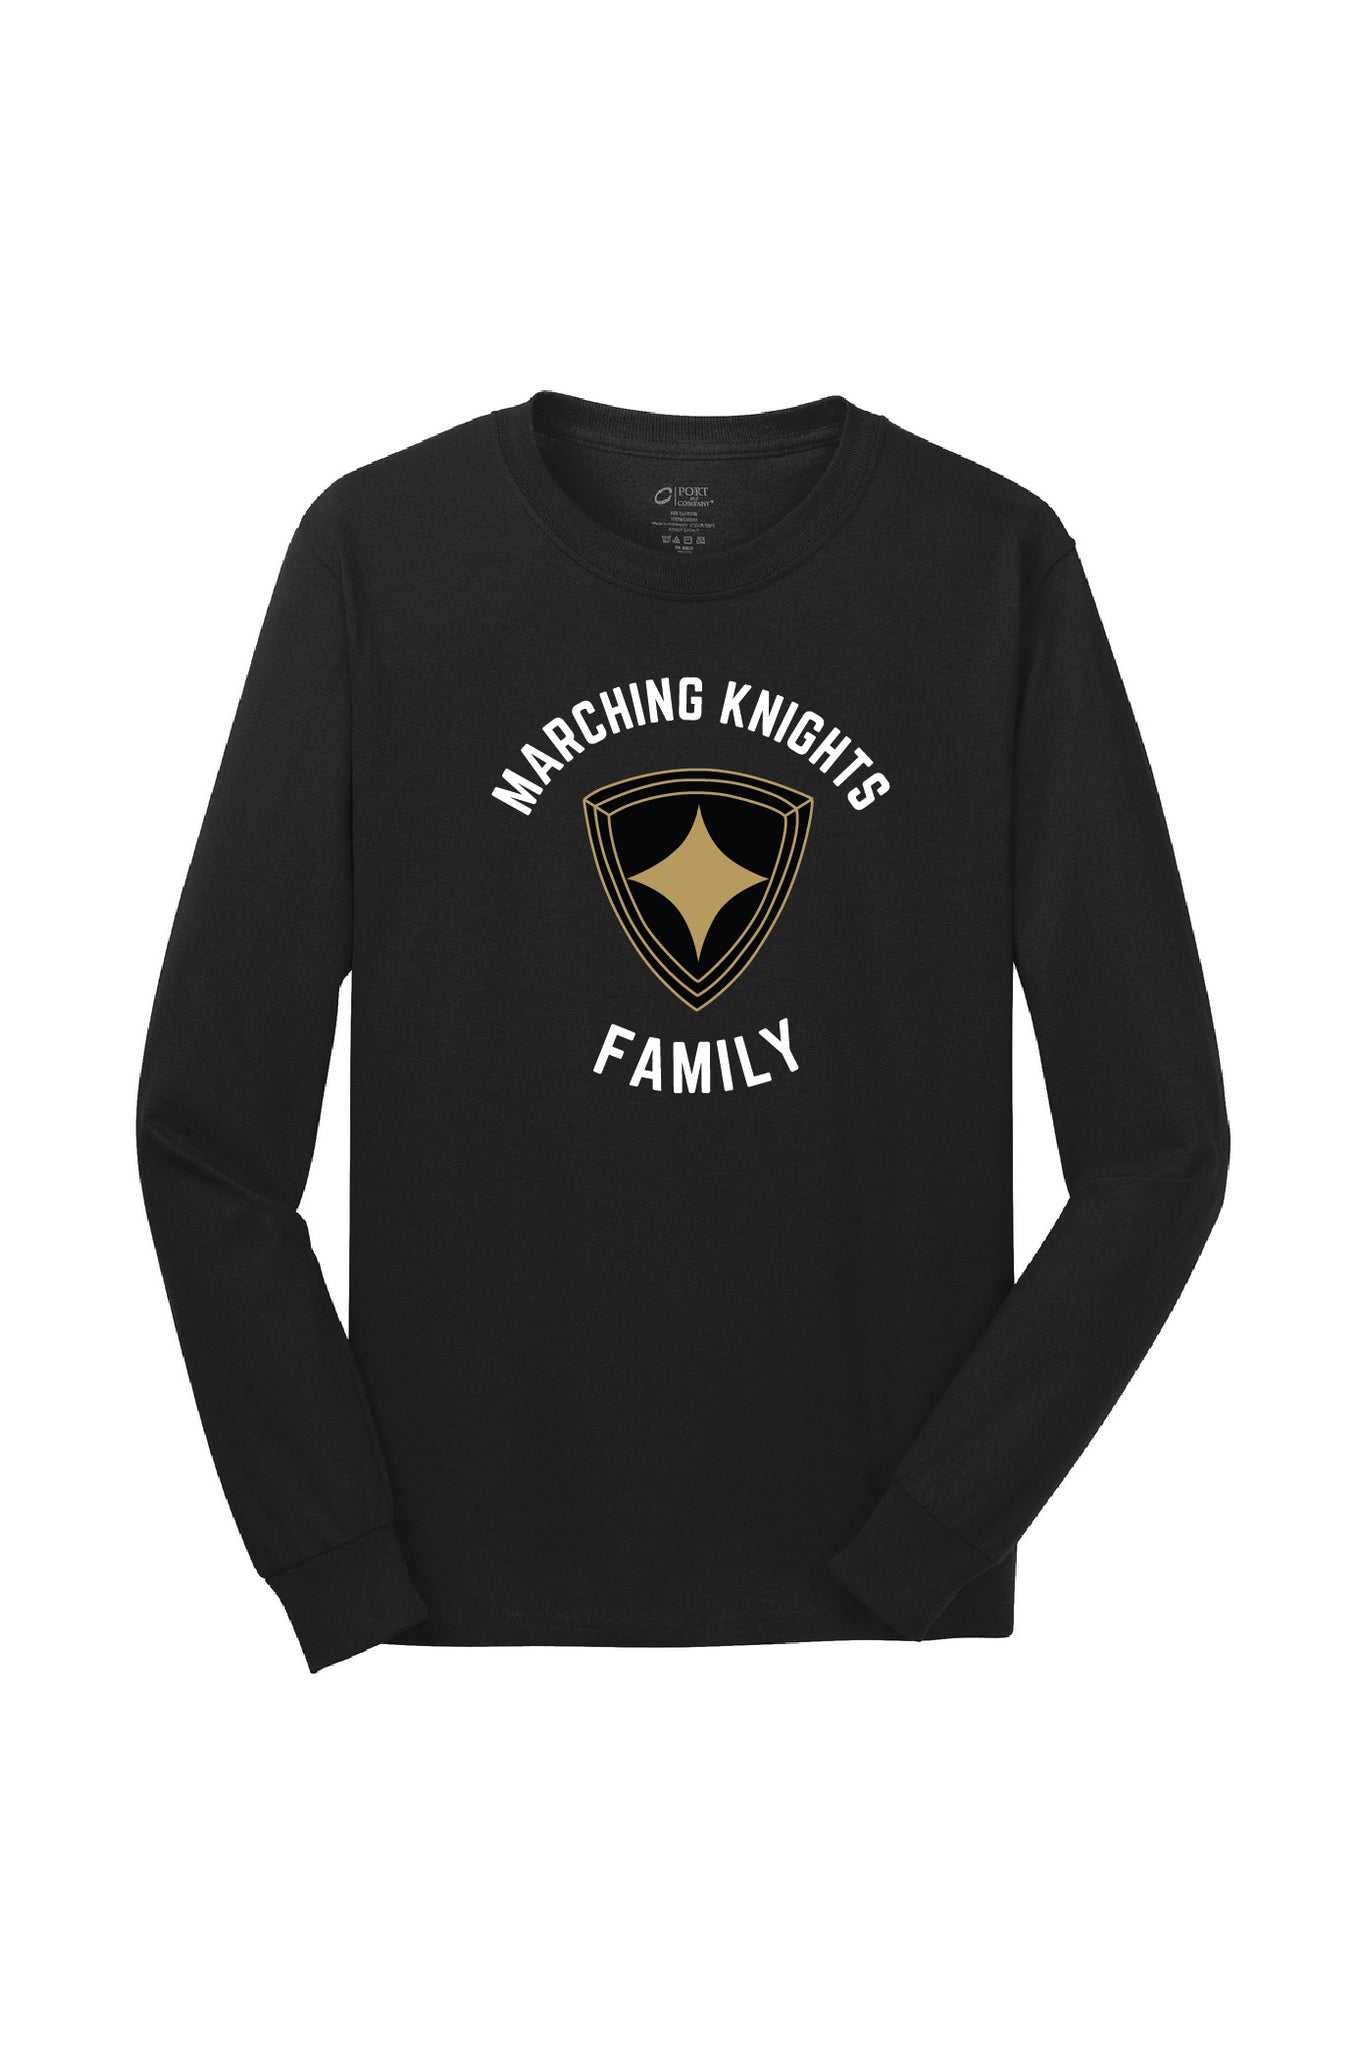 Family Long Sleeve T-Shirt (Black or Gray) - NEW